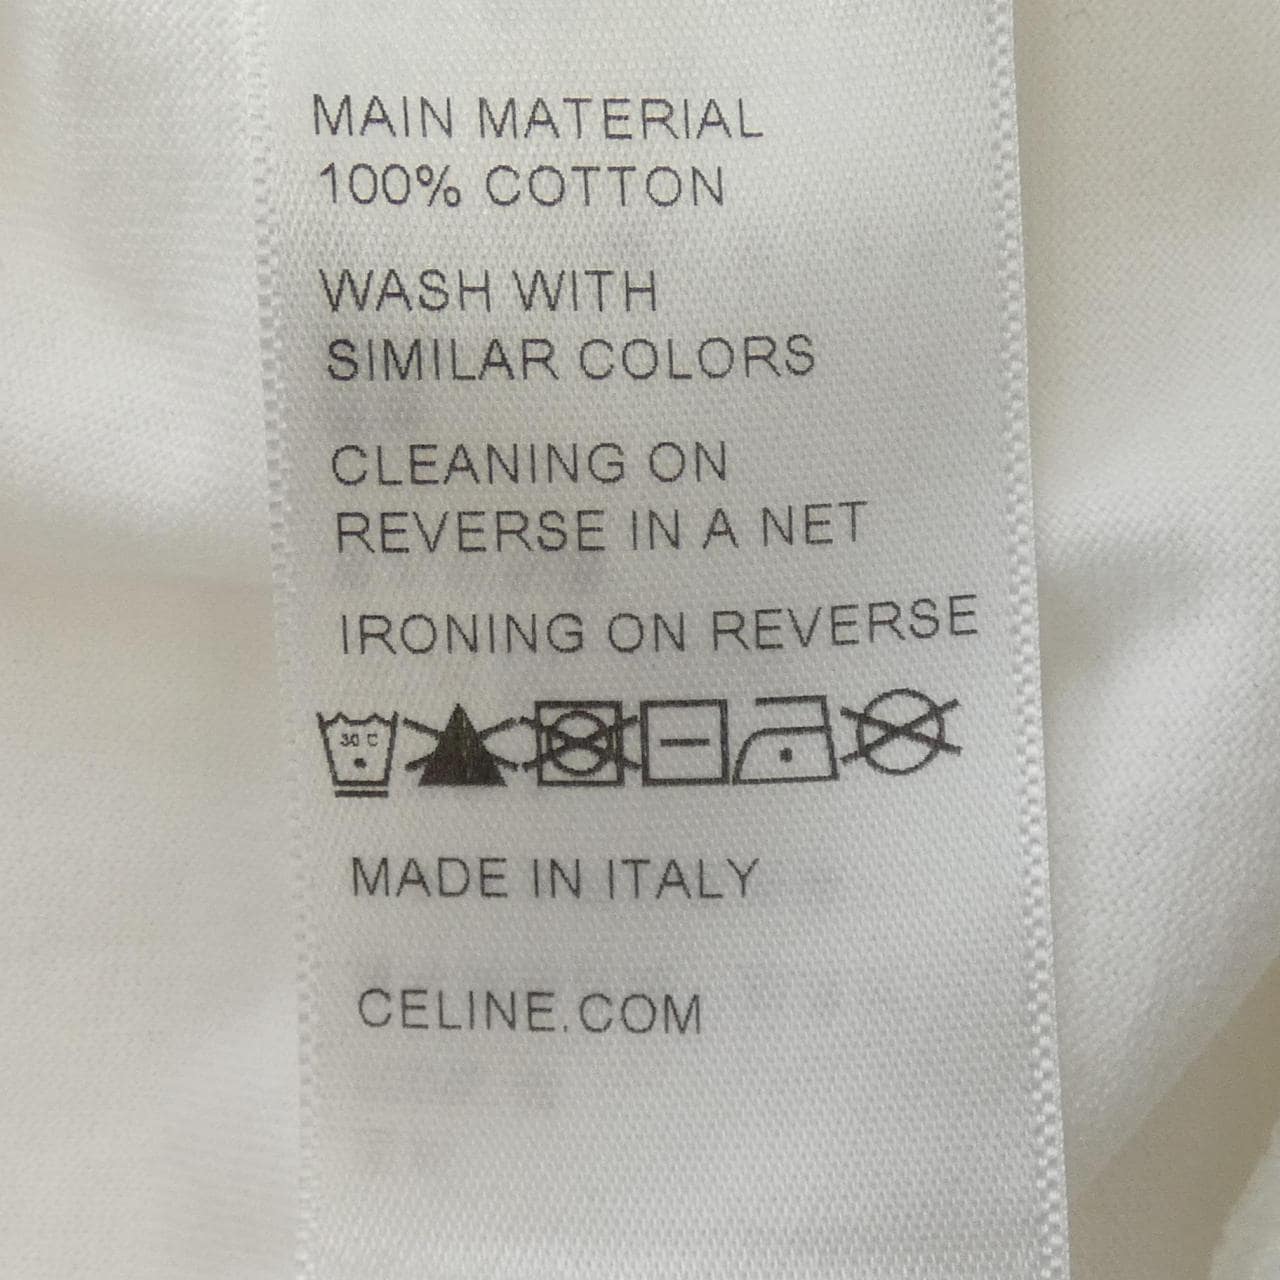 CELINE Celine T-shirt